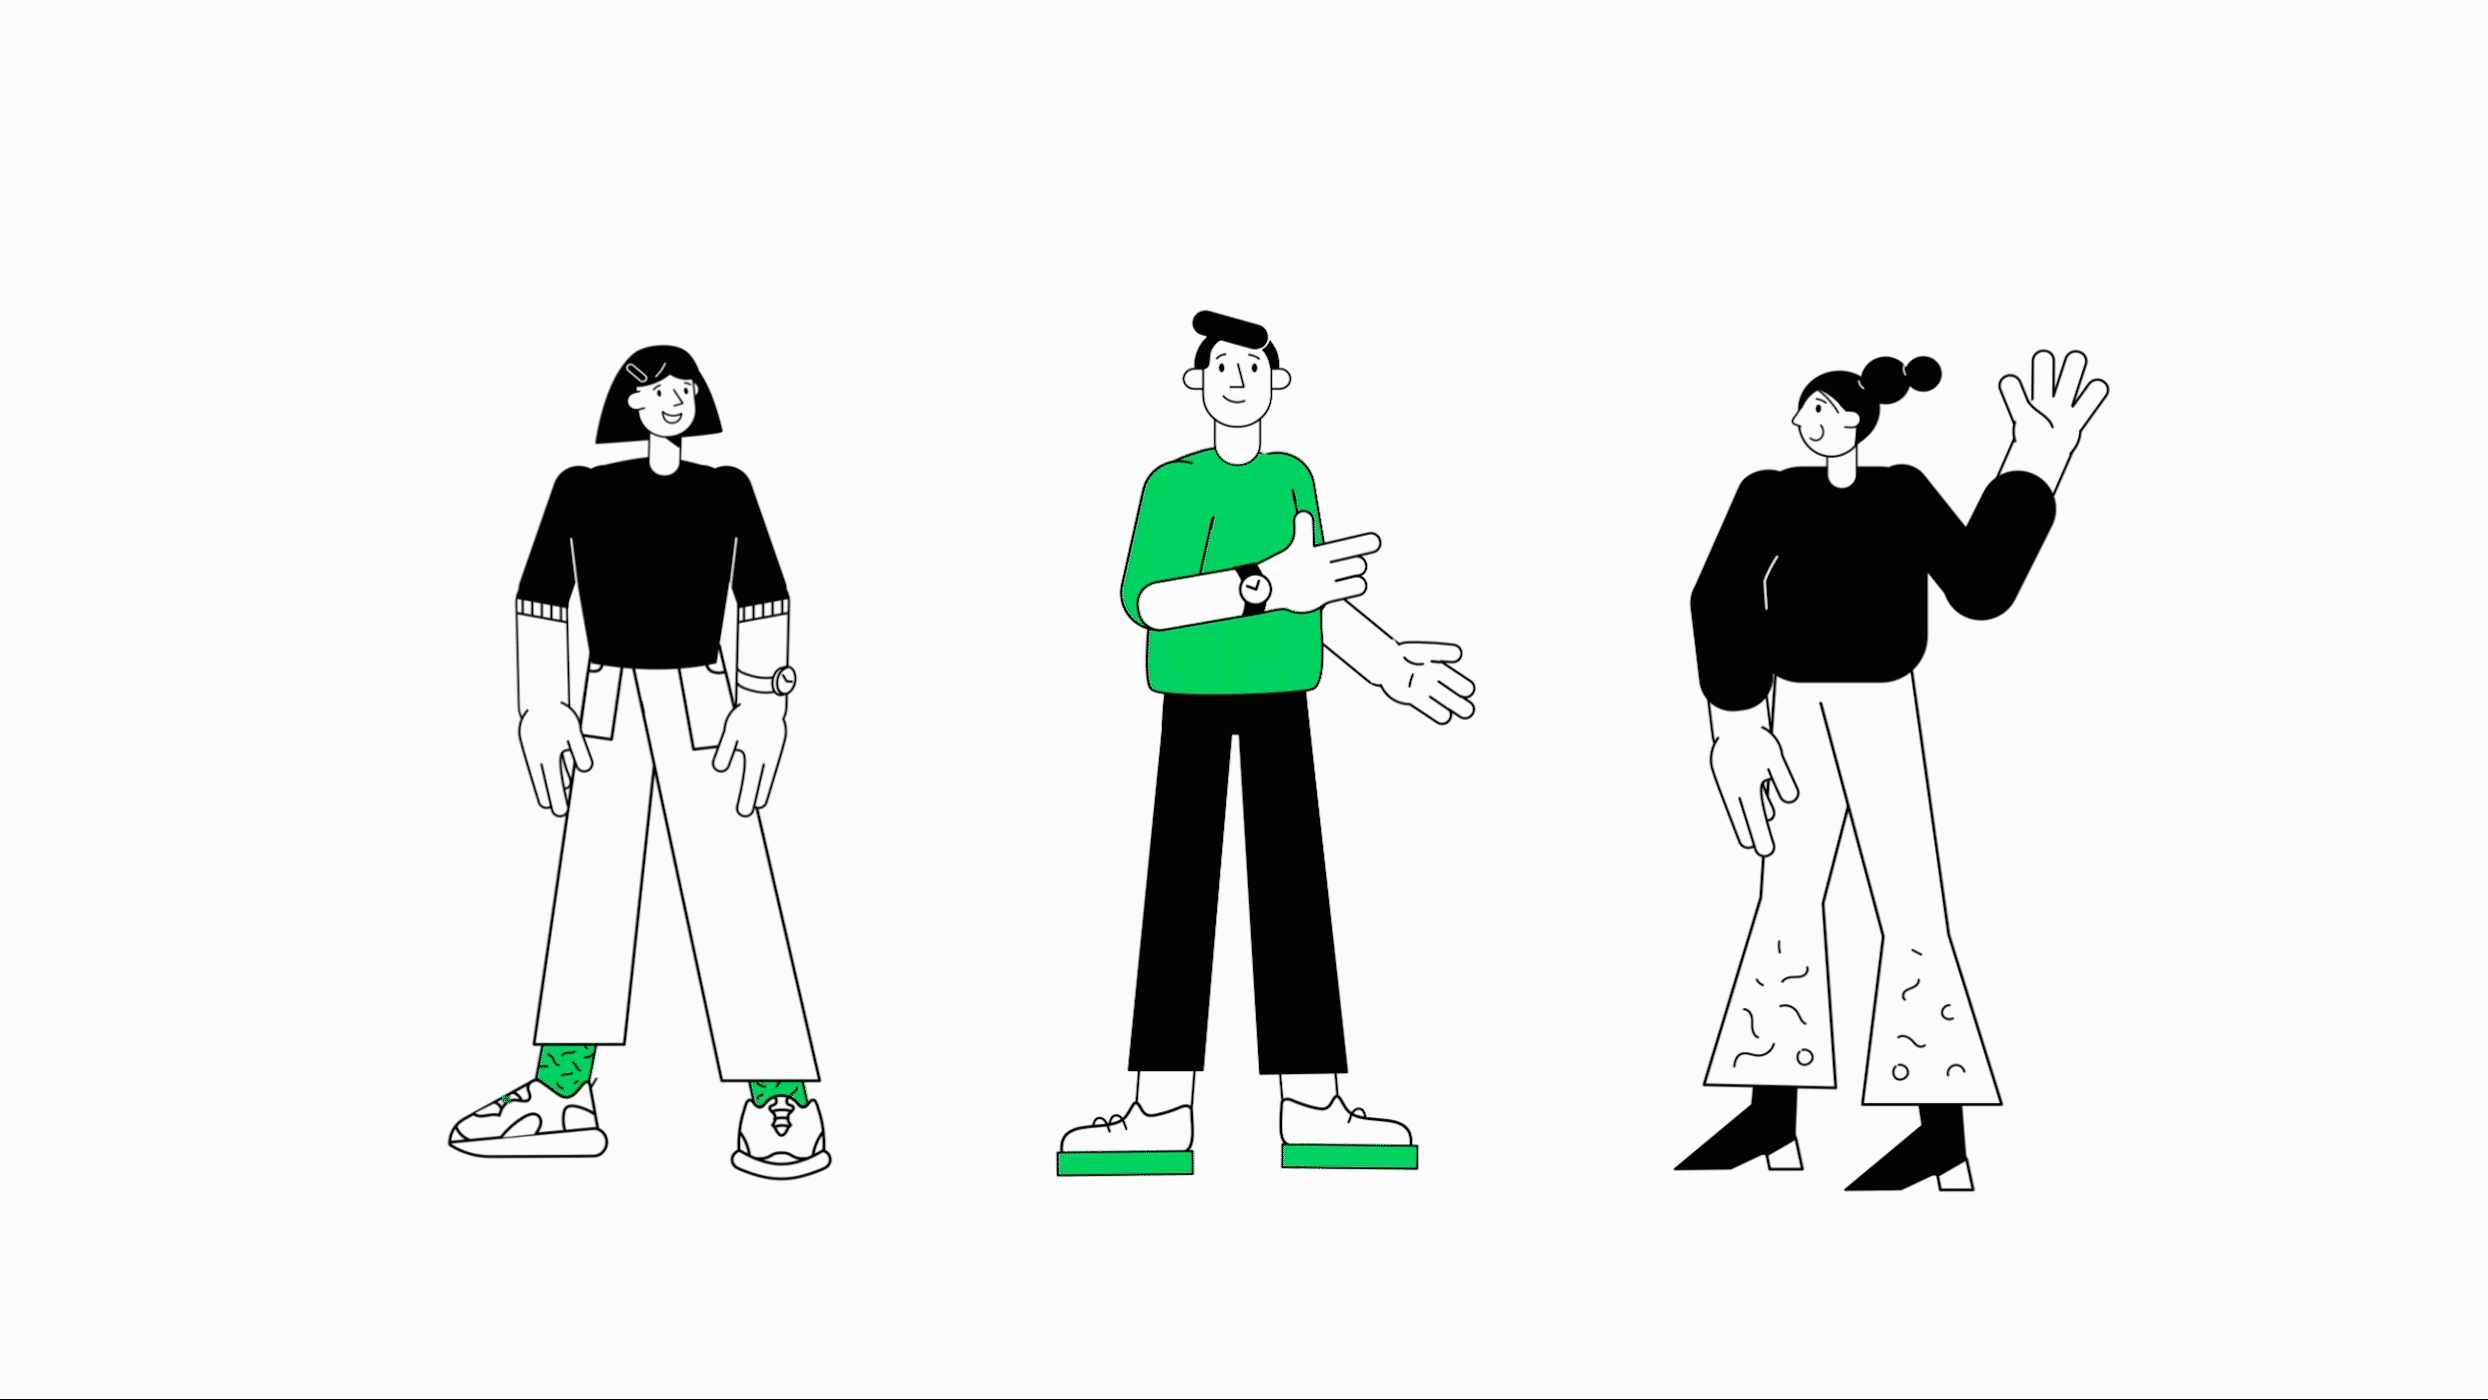 A custom illustration of humans by the Netguru Team